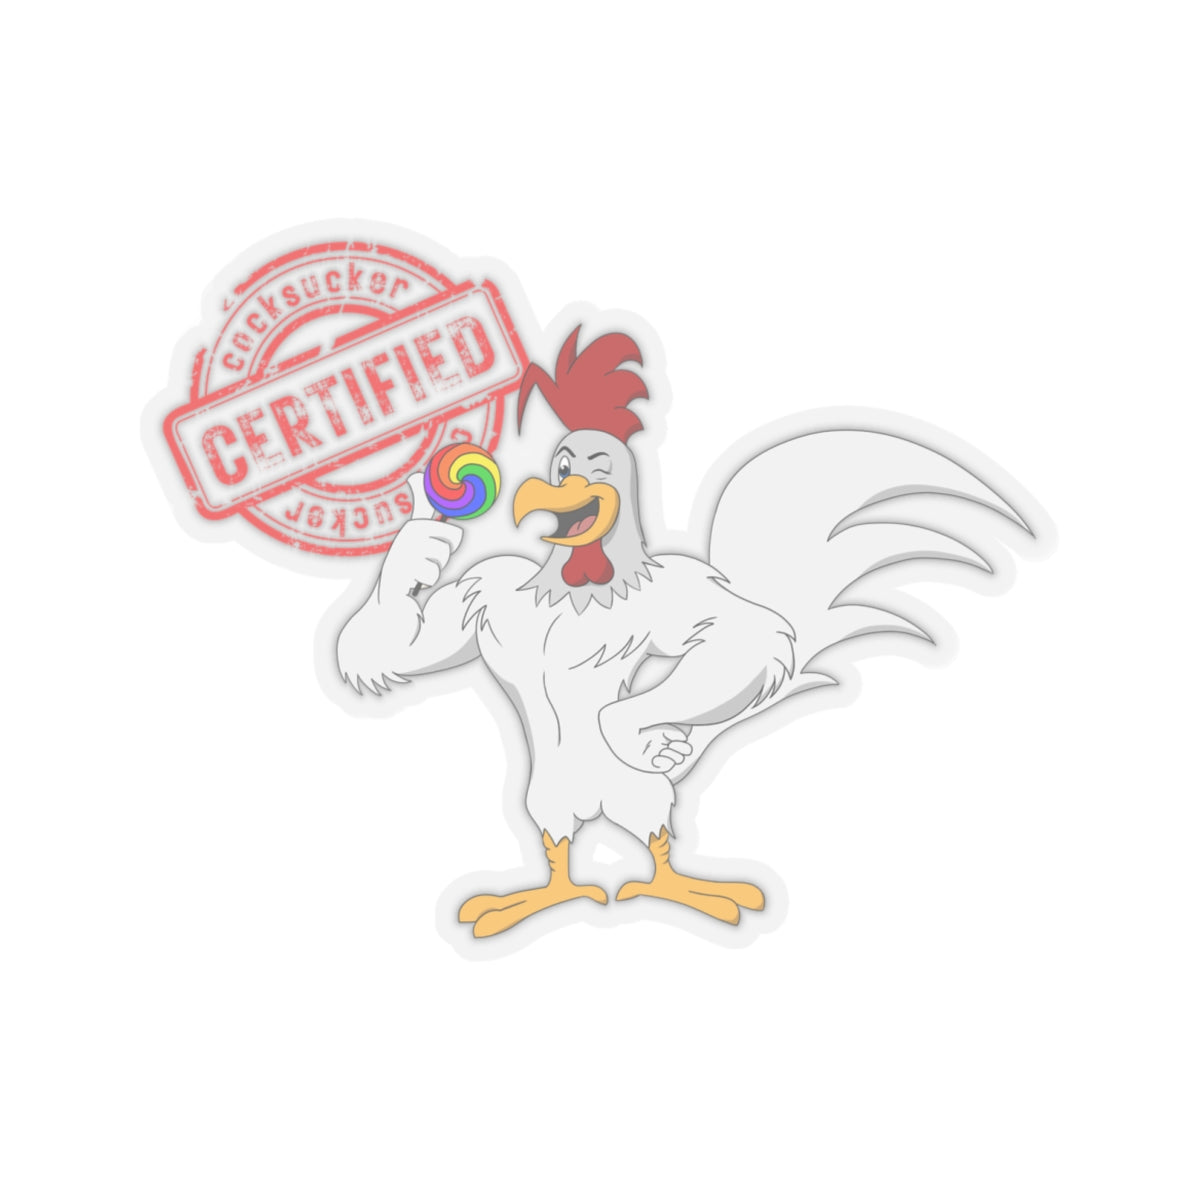 Certified CockSucker Stickers